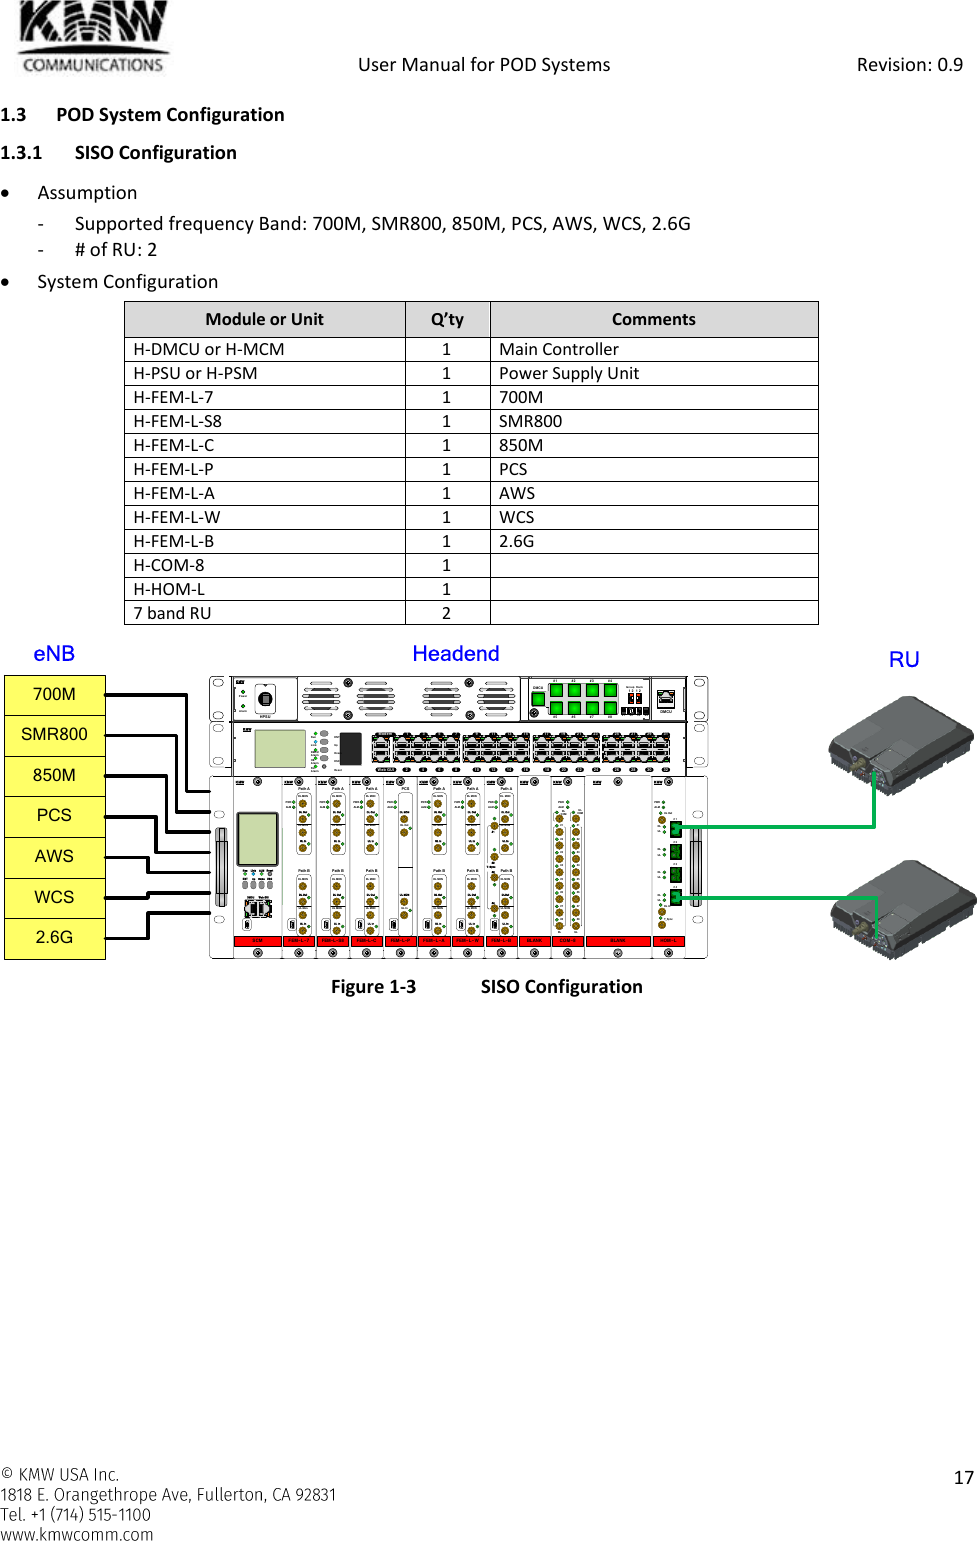            User Manual for POD Systems                                                     Revision: 0.9    17  1.3 POD System Configuration 1.3.1 SISO Configuration  Assumption - Supported frequency Band: 700M, SMR800, 850M, PCS, AWS, WCS, 2.6G - # of RU: 2  System Configuration Module or Unit Q’ty Comments H-DMCU or H-MCM 1 Main Controller H-PSU or H-PSM 1 Power Supply Unit H-FEM-L-7 1 700M H-FEM-L-S8 1 SMR800 H-FEM-L-C 1 850M H-FEM-L-P 1 PCS H-FEM-L-A 1 AWS H-FEM-L-W 1 WCS H-FEM-L-B 1 2.6G H-COM-8 1  H-HOM-L 1  7 band RU 2   Figure 1-3  SISO Configuration   FEM-L-WUL MONDL MONDL OutUL InUL MONDL MONDL OutUL InPWRALMPath APath BKMWFEM-L-AUL MONDL MONDL OutUL InUL MONDL MONDL OutUL InPWRALMPath APath BKMWFEM-L-7UL MONDL MONDL OutUL InUL MonDL MONDL OutUL InPWRALMPath APath BKMWFEM-L-S8UL MONDL MONDL OutUL InUL MONDL MONDL OutUL InPWRALMPath APath BKMWFEM-L-CUL MONDL MONDL OutUL InUL MONDL MONDL OutUL InPWRALMPath APath BKMWFEM-L-BUL MONDL  MONDLOutUL InUL MONDL MONDL OutUL InPWRALMPath APath B#1#2#3#4T-SyncKMWFEM-L-PDL OutUL MONUL InDL MONPWRALMPCSKMWRun Link ALM ResetENT Up Down ESCDMCU Web GUISCMKMWCOM-8PWRALMDLCOM#1#2#3#4#5#6#7#8#1#2#3#4#5#6#7#8ULCOMDL ULKMWHOM-LPWRALMUL OutDL InT_SyncDLULDLULDLULDLULKMW# 1# 2# 3# 4ENTUpDownESCResetRunDMCUAlarmLinkHEAlarmRUAlarm12345 76 89 11 13 1510 12 14 1617 19 21 2318 20 22 2425 27 29 3126 28 30 32ModemWeb GUIKMWDMCUHPSUPowerAlarm#1             #2             #3             #4#5             #6             #7             #8DMCU   #1     #2     #3     #41 2  1 2Group  RackKMWBLANKKMW700MeNBSMR800850MPCSAWSWCS2.6GHeadend RUBLANKKMW